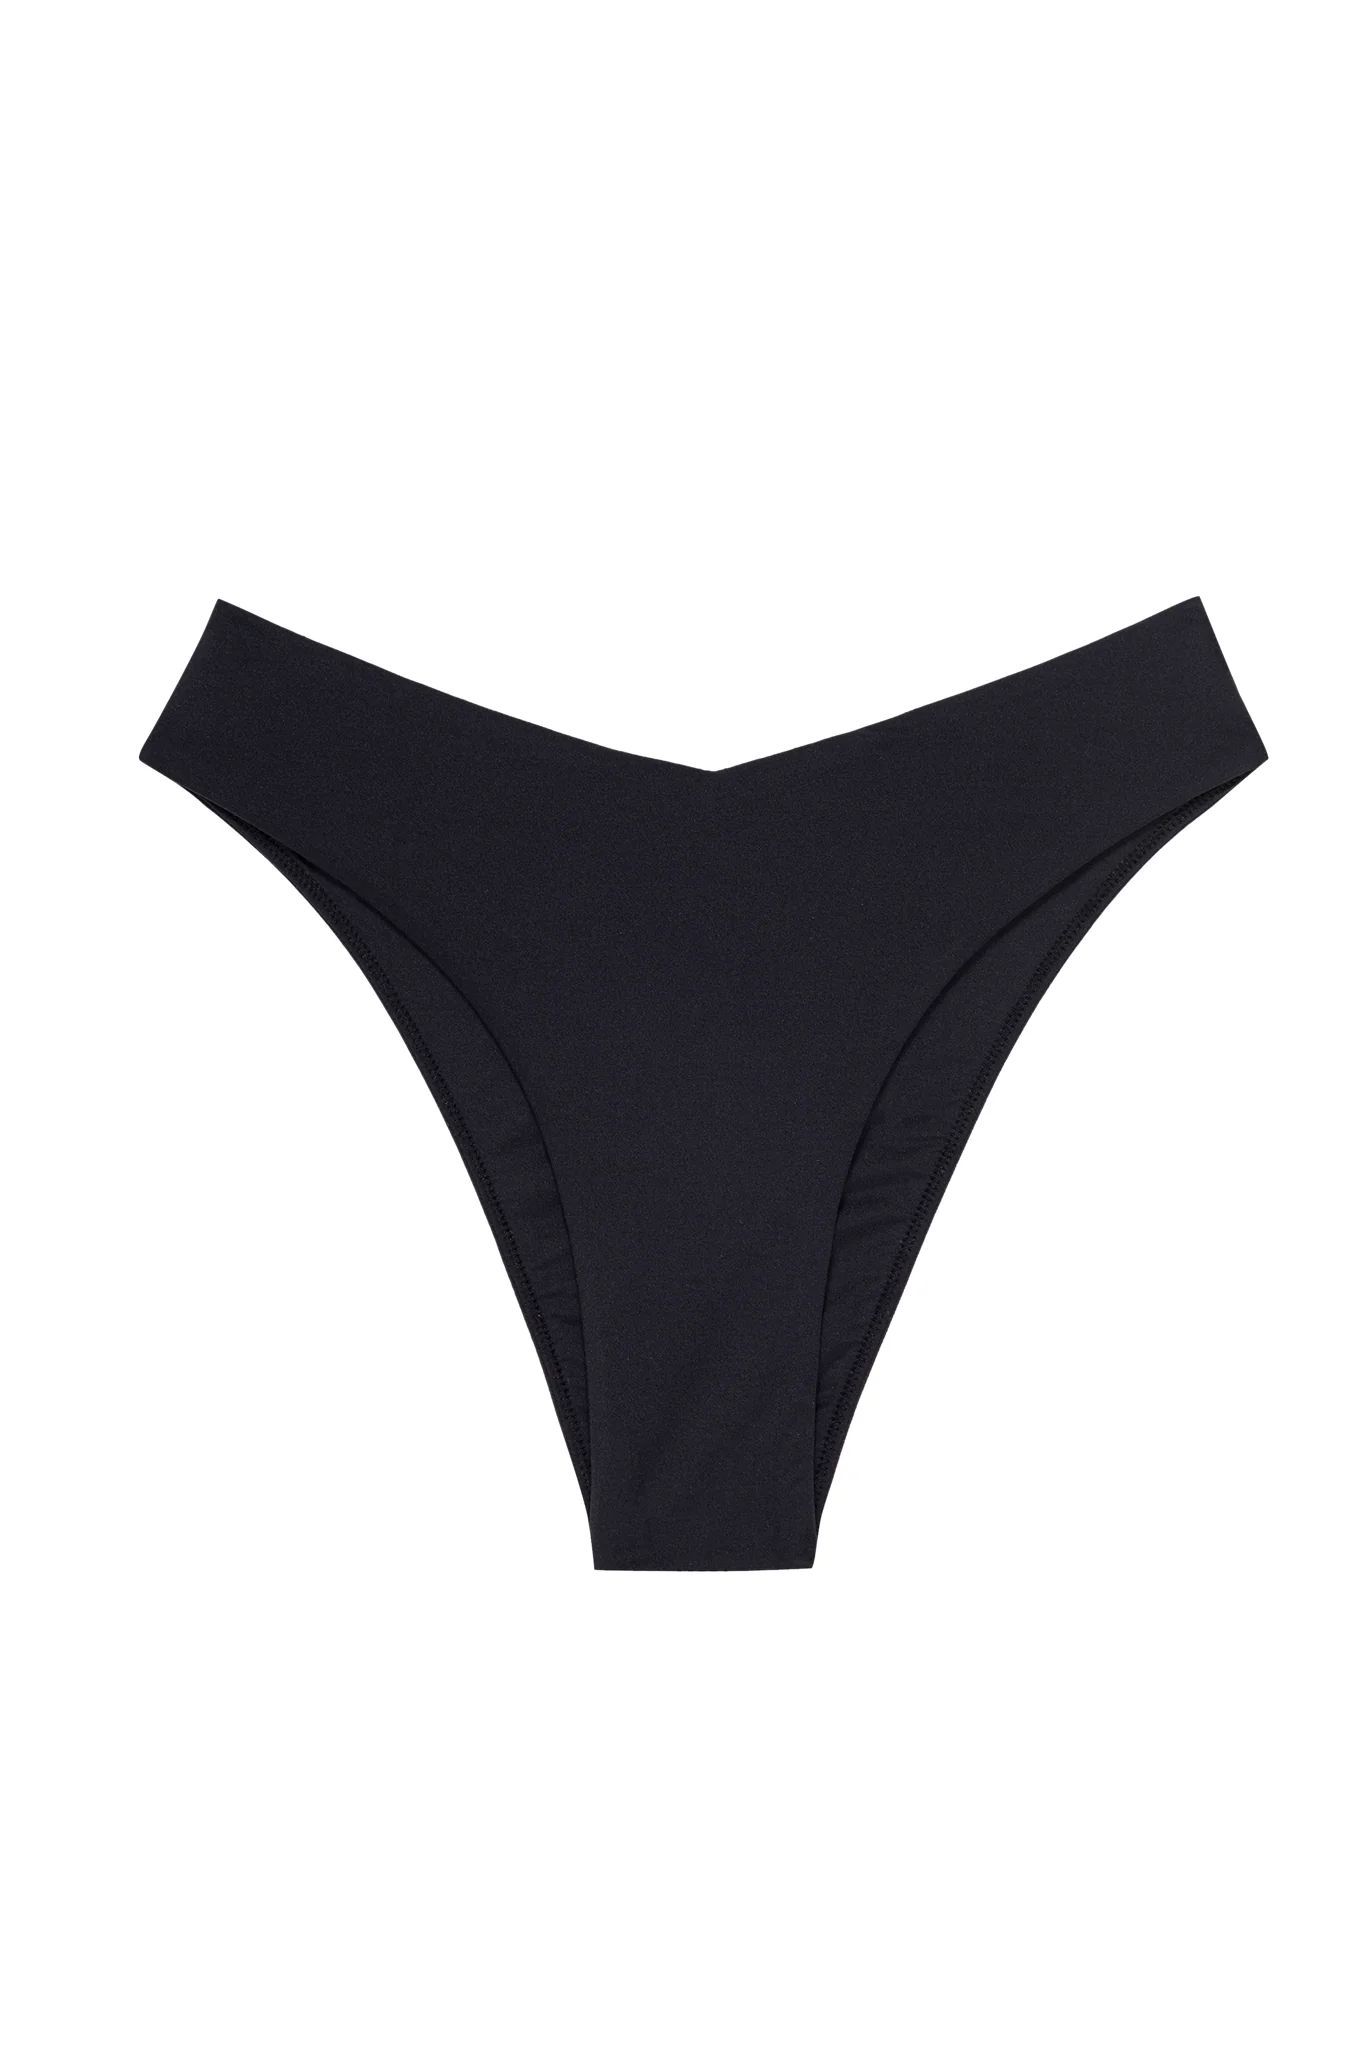 St. Lucia Bottom - Black | Monday Swimwear